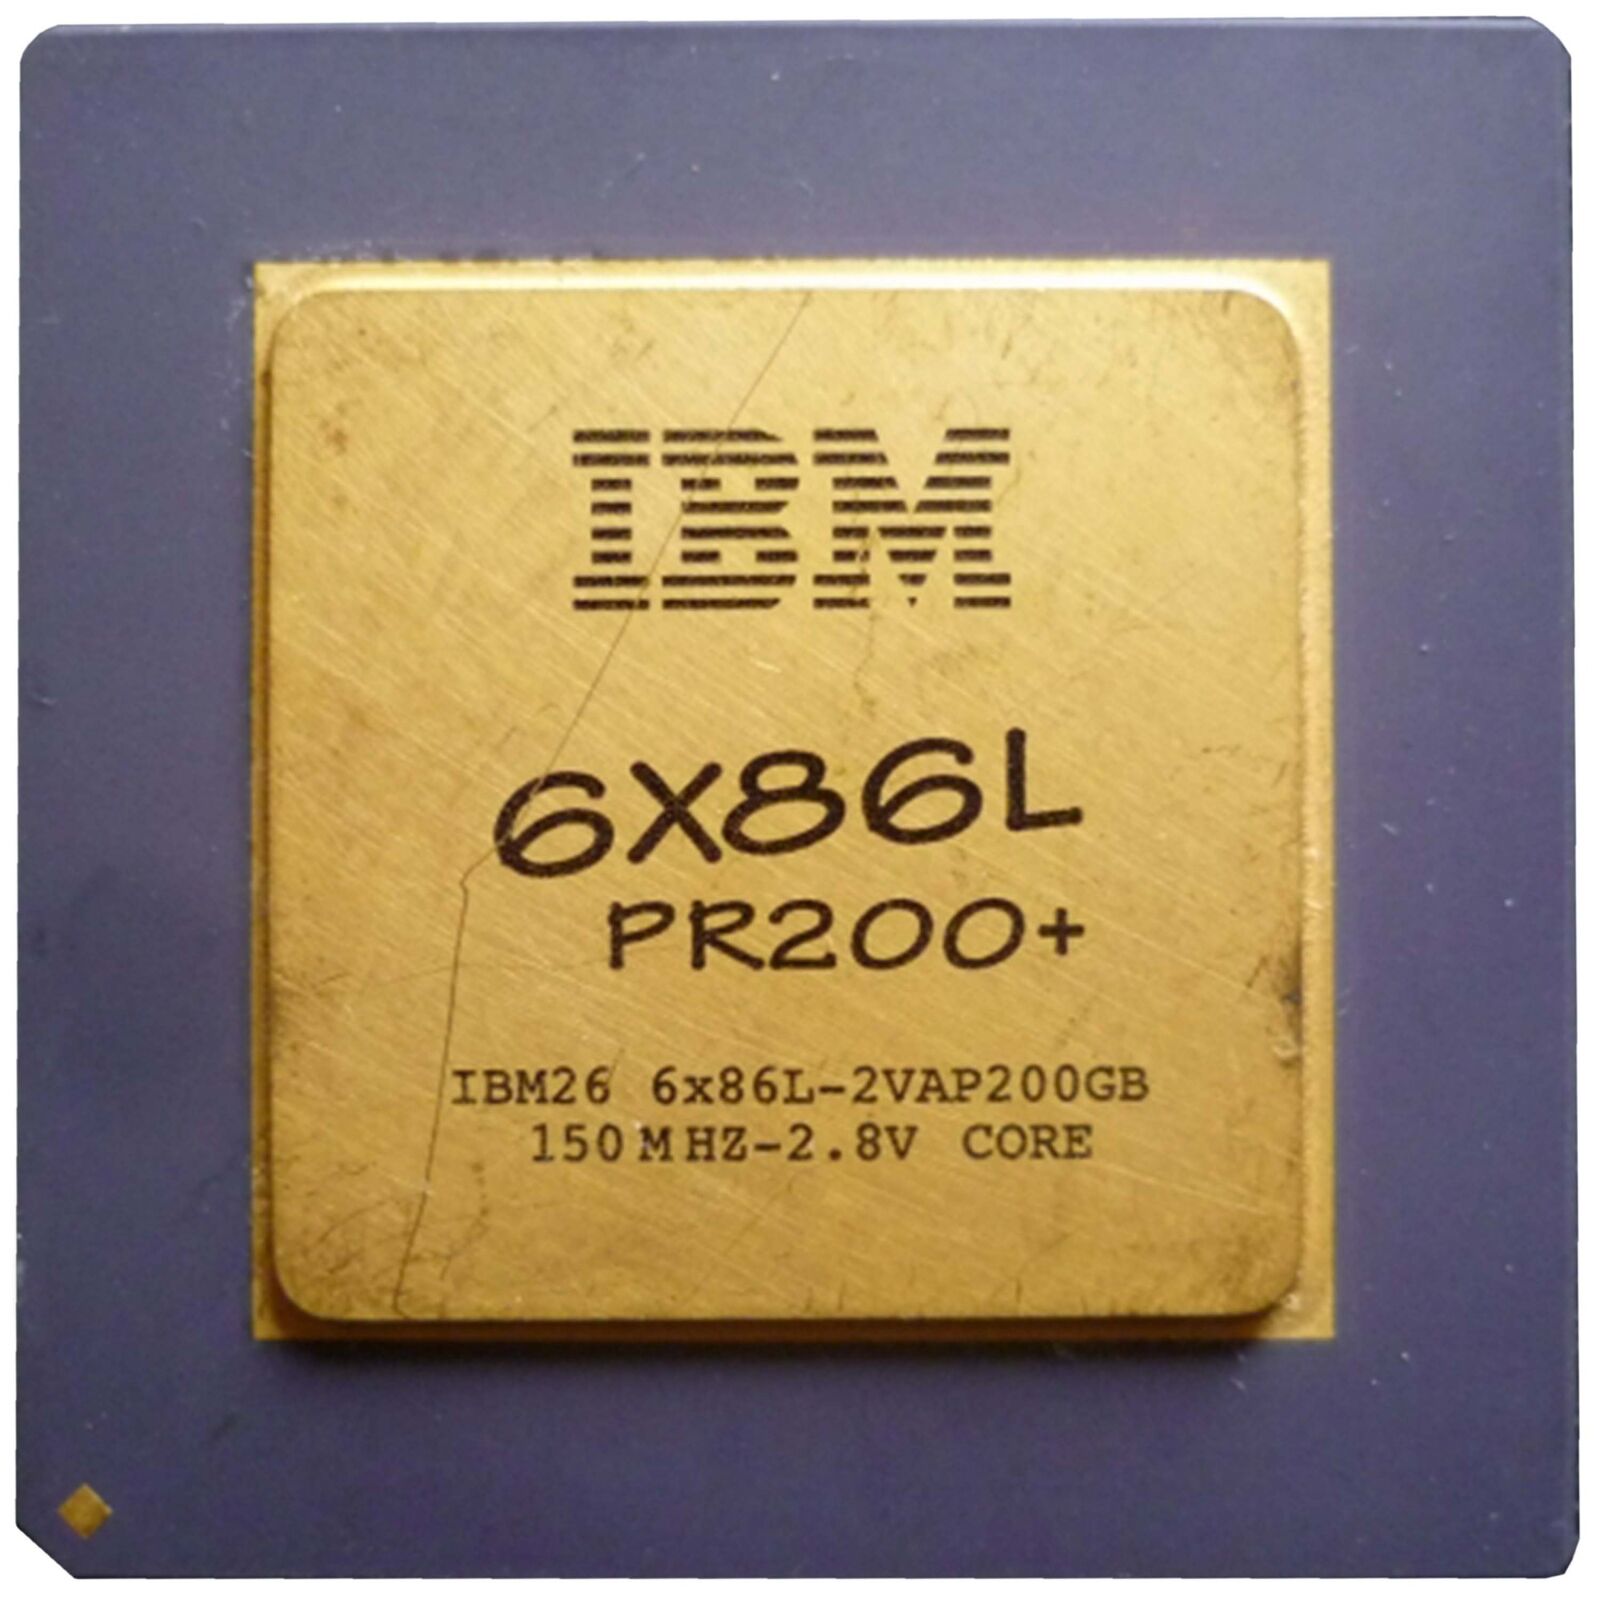 IBM PC CPU Pga321 Socket 7 6x86l Pr200+150mhz 2vap200gb CPU Processor Vintage_